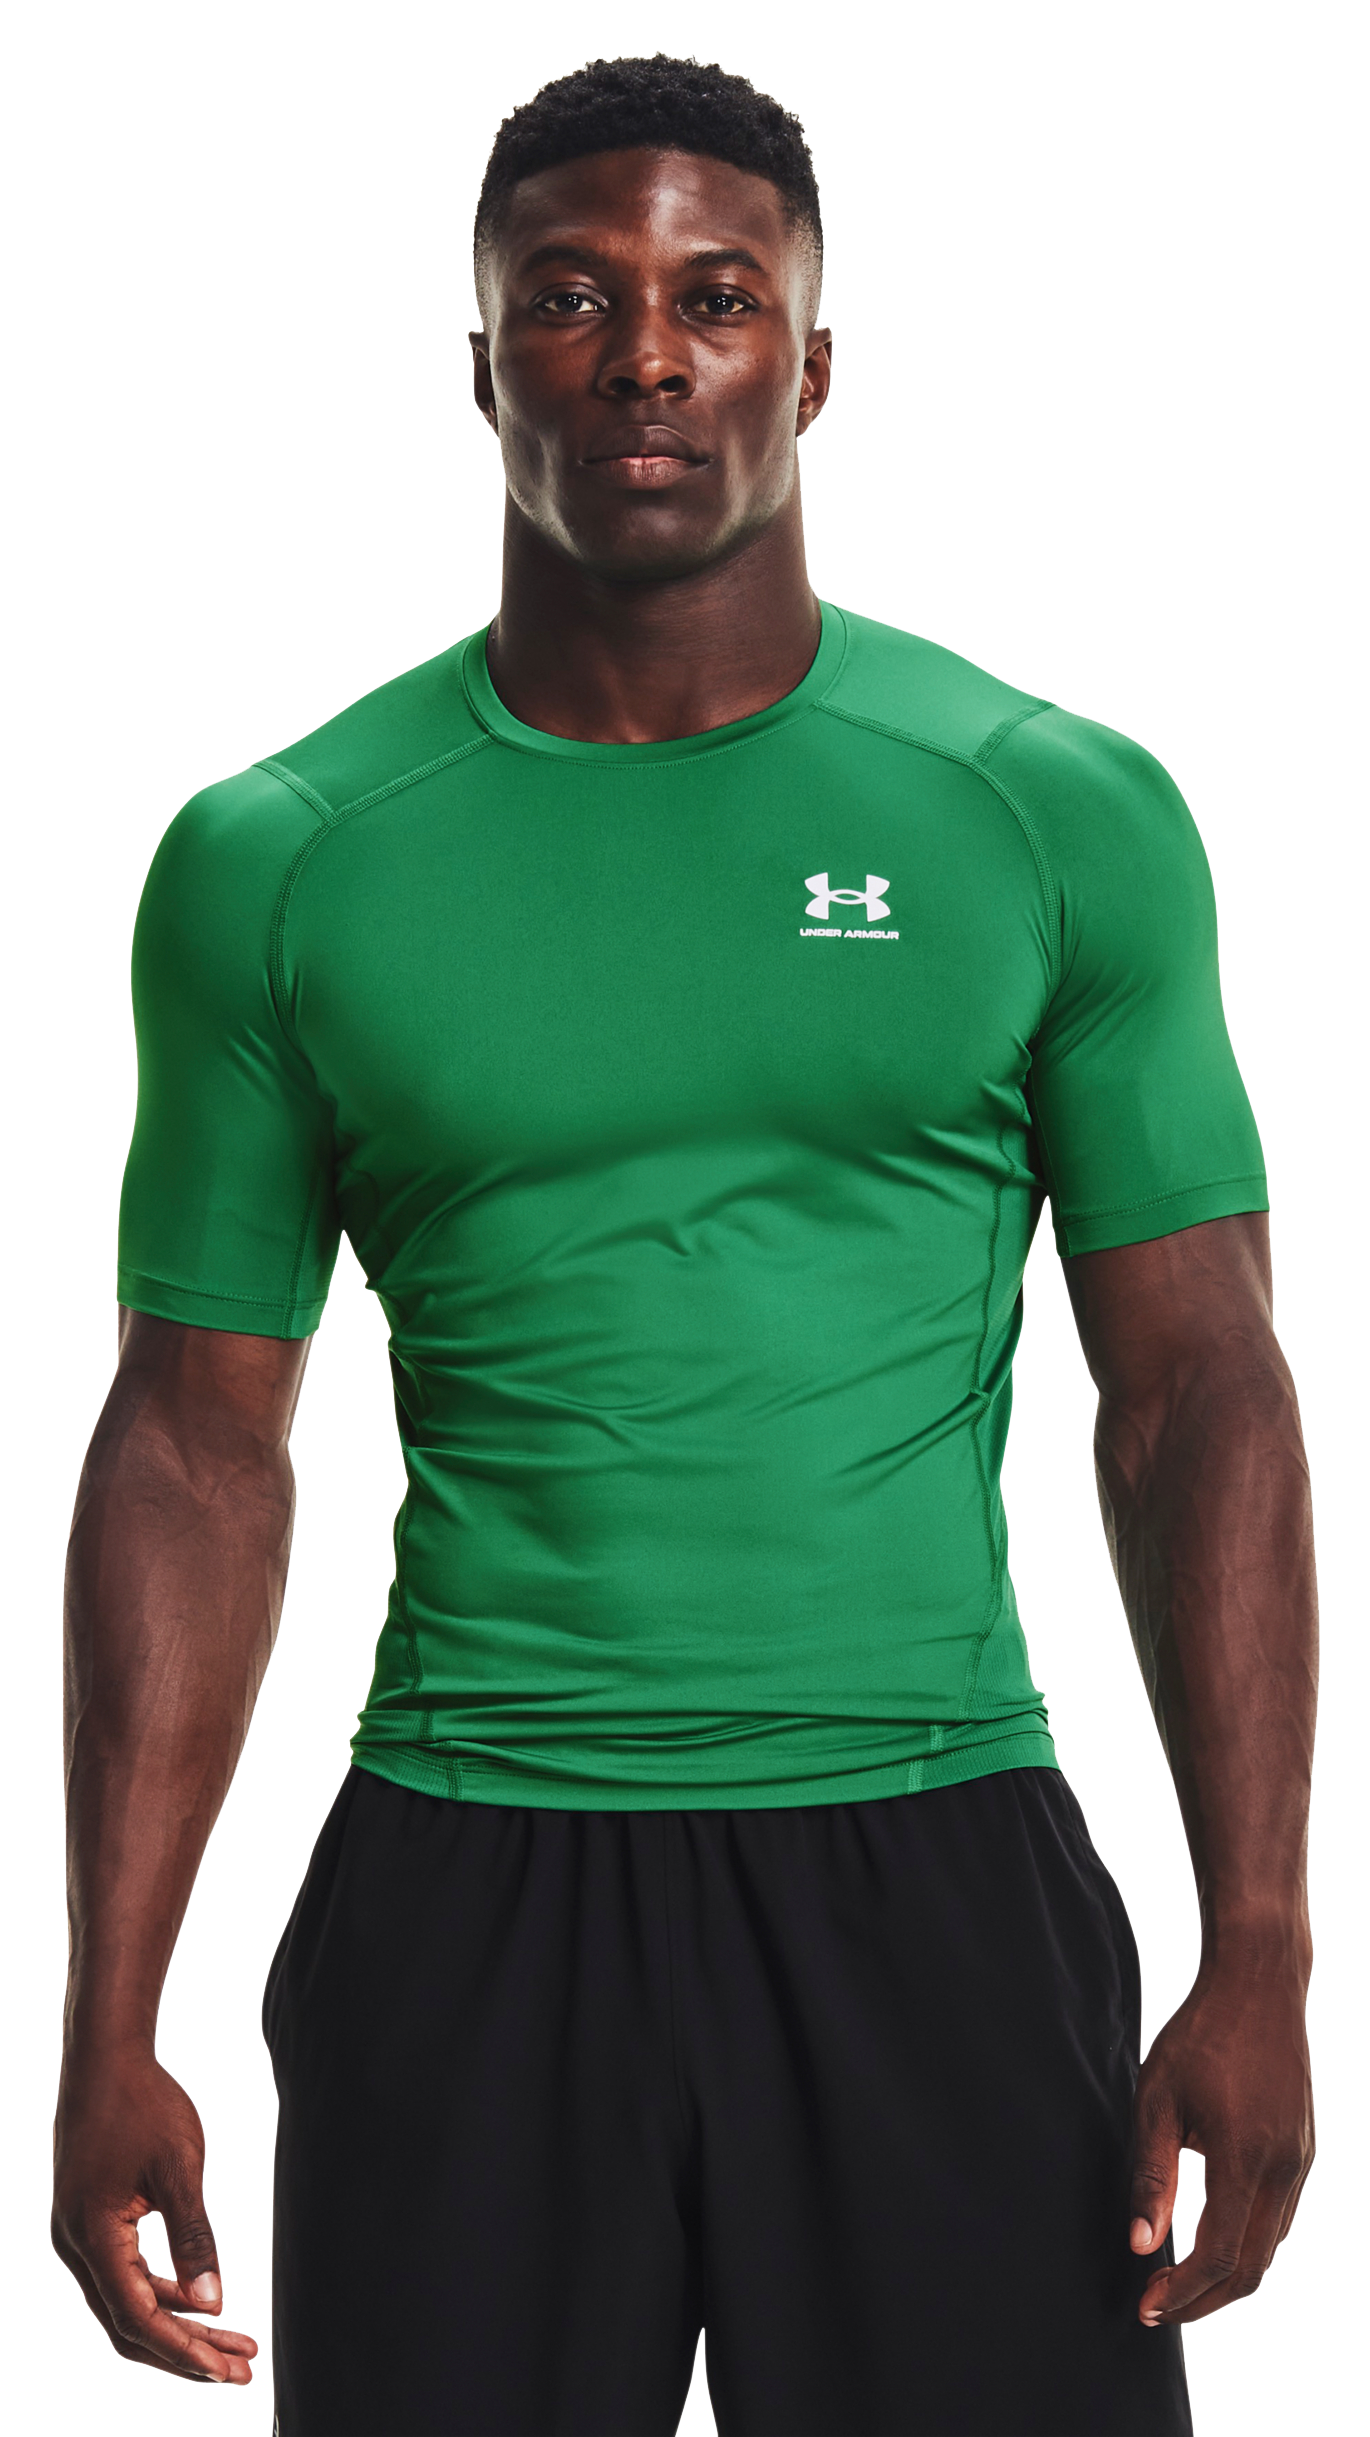 Under Armour HeatGear Short-Sleeve T-Shirt for Men - Team Kelly Green/White - XL